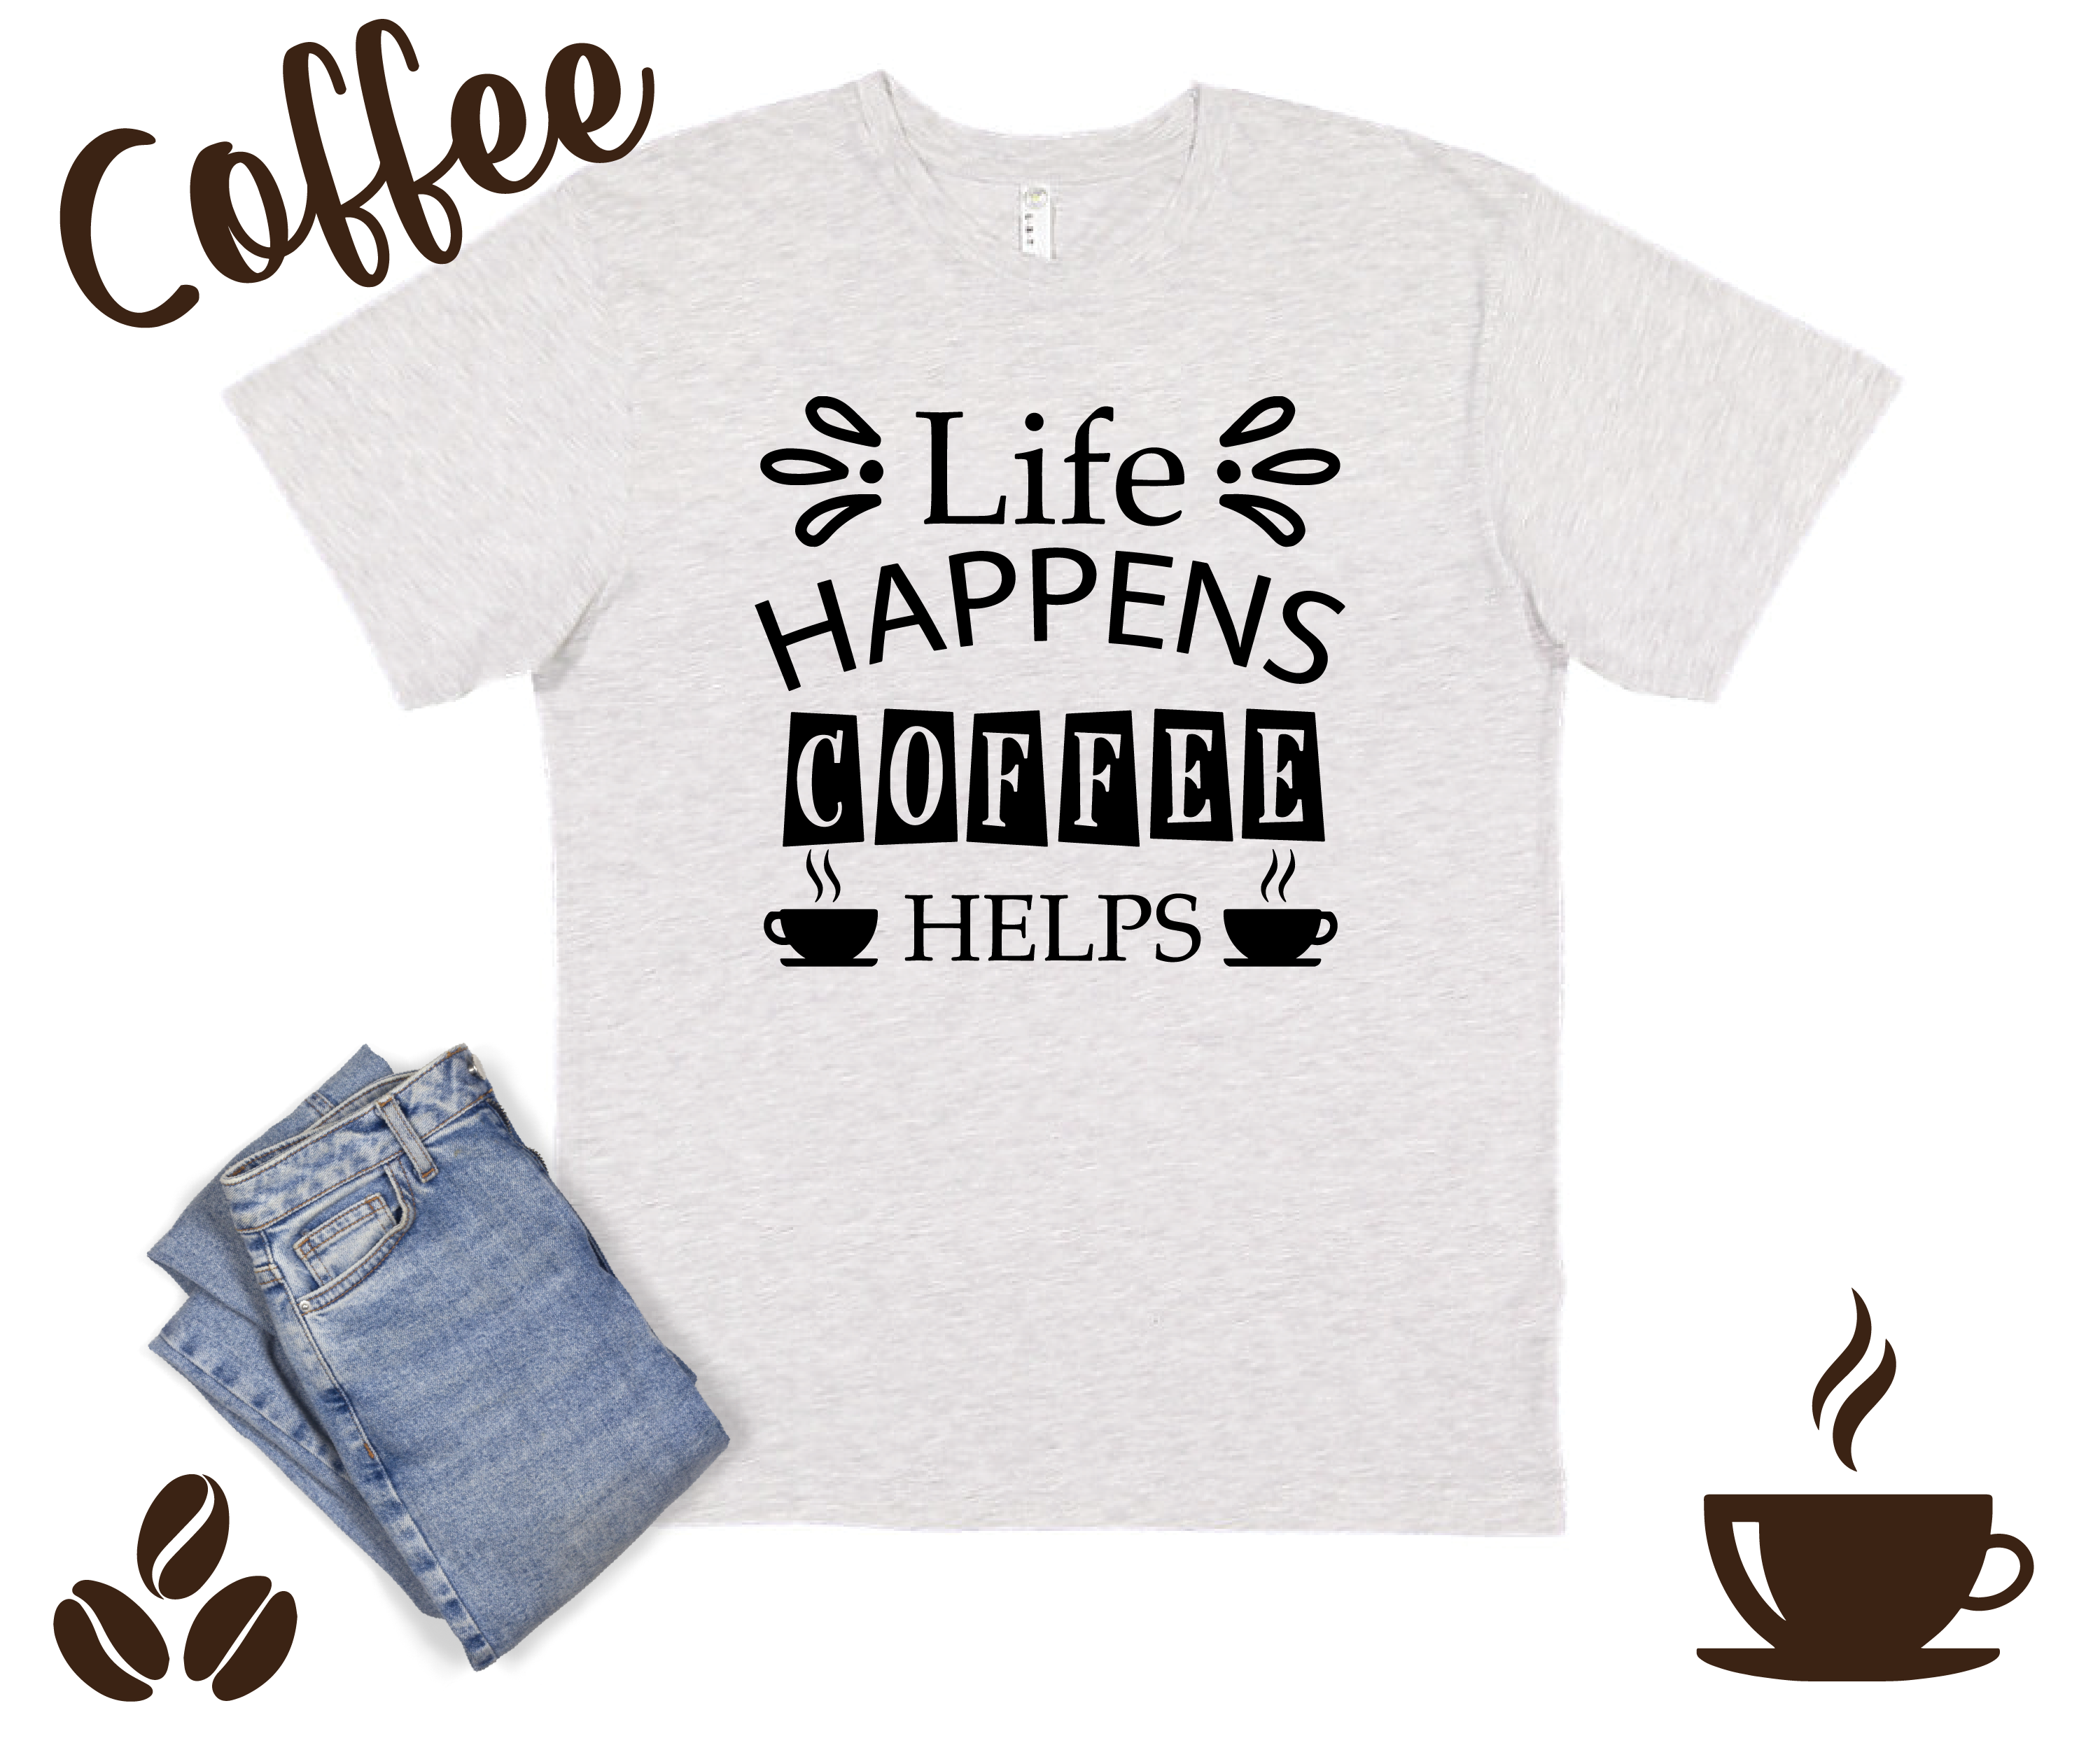 Coffee Lover Printed Shirt